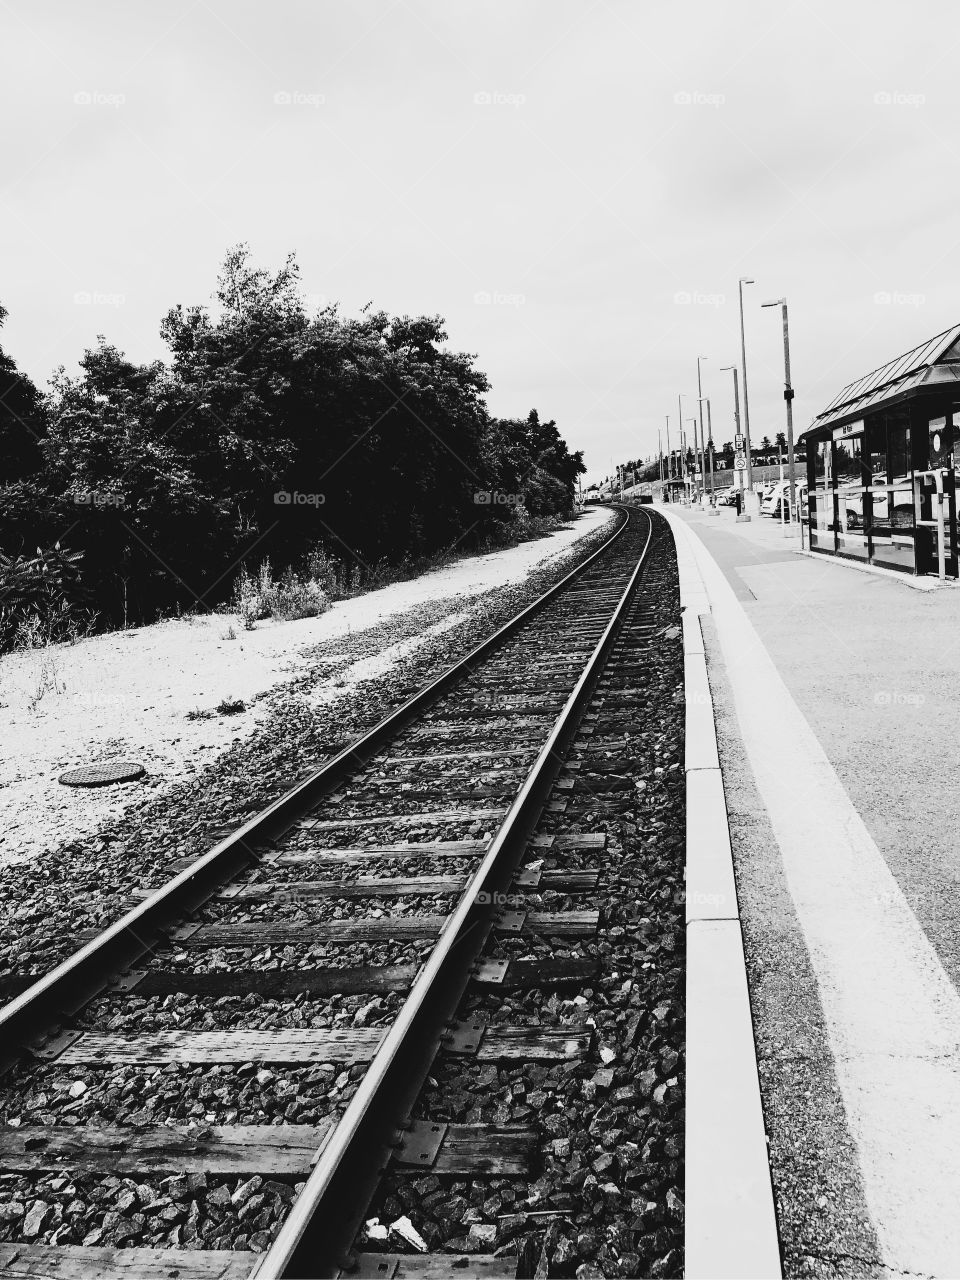 Train tracks in black and white